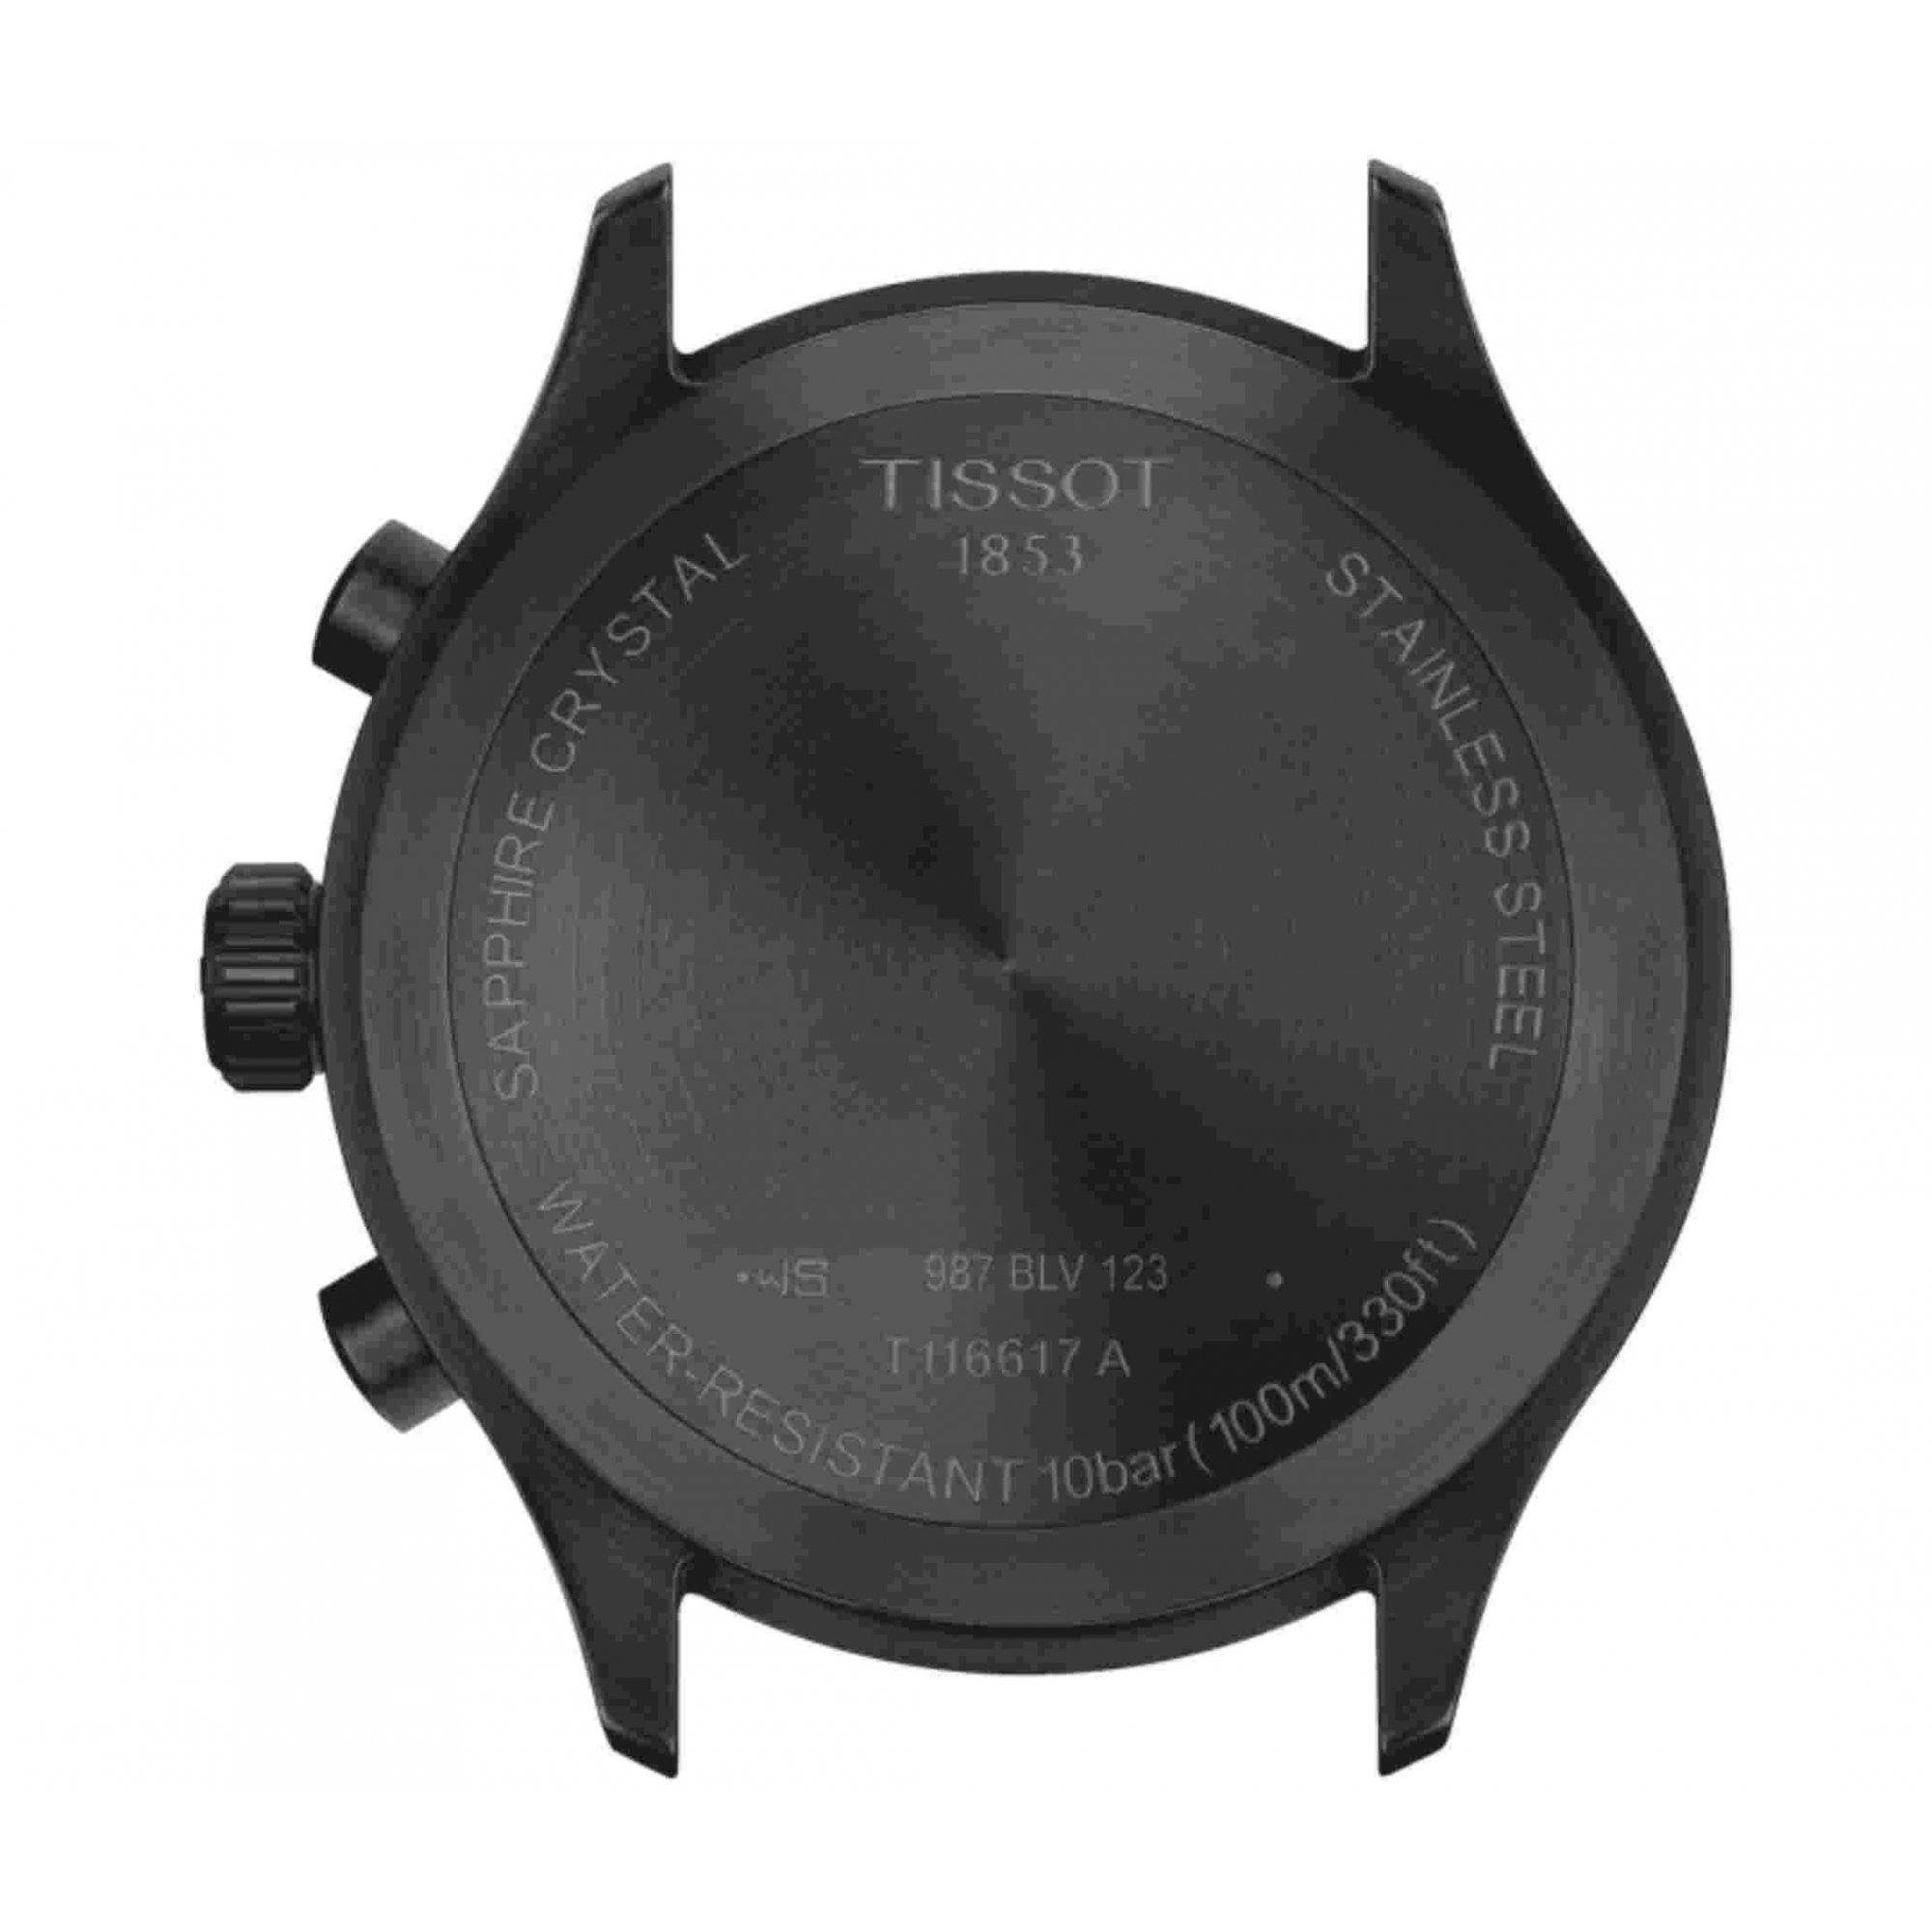 Relógio Tissot XL Classic Preto T116.617.36.052.00